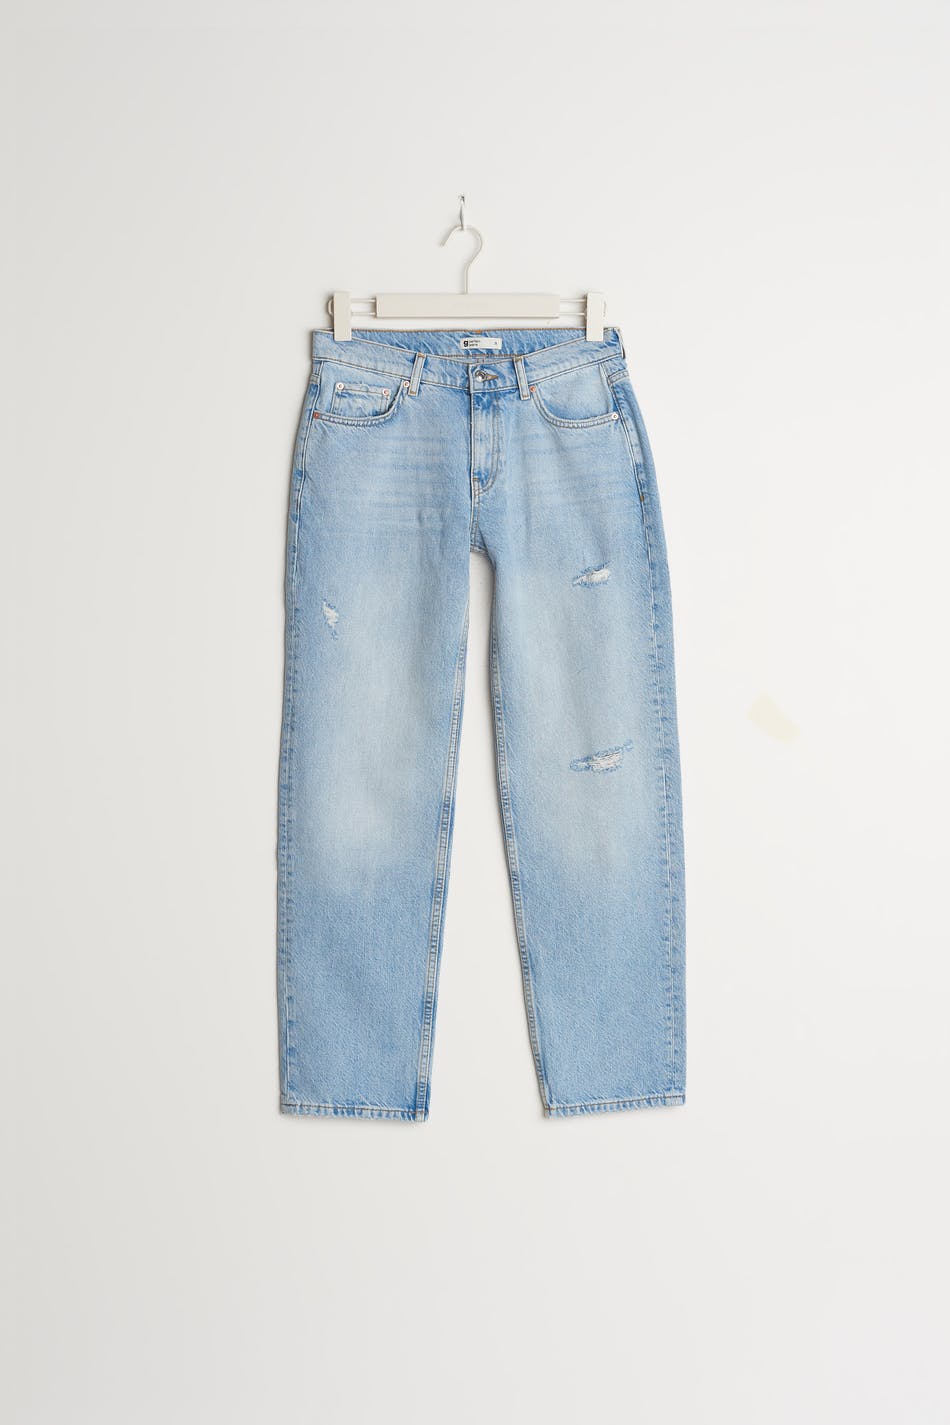 Gina Tricot 90s petite low waist jeans 32  Lt blue